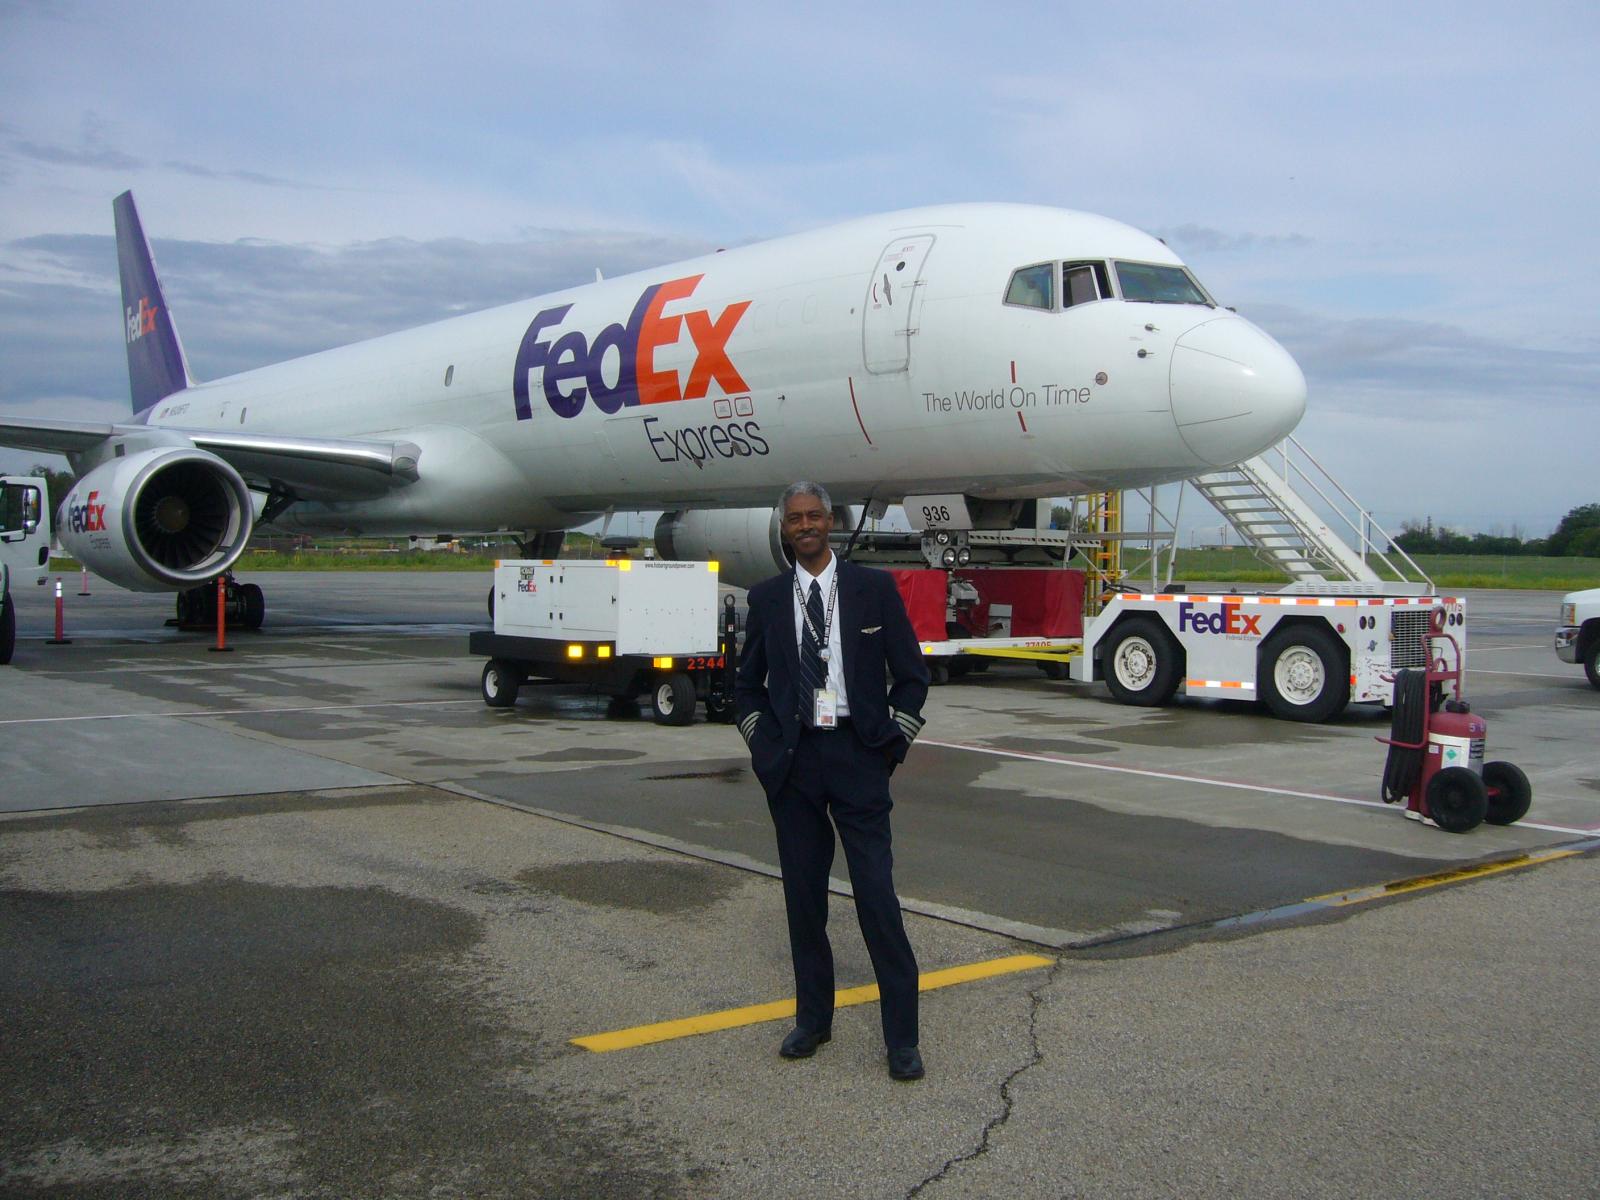 Pilot Hank Taylor in front of FedEx plane